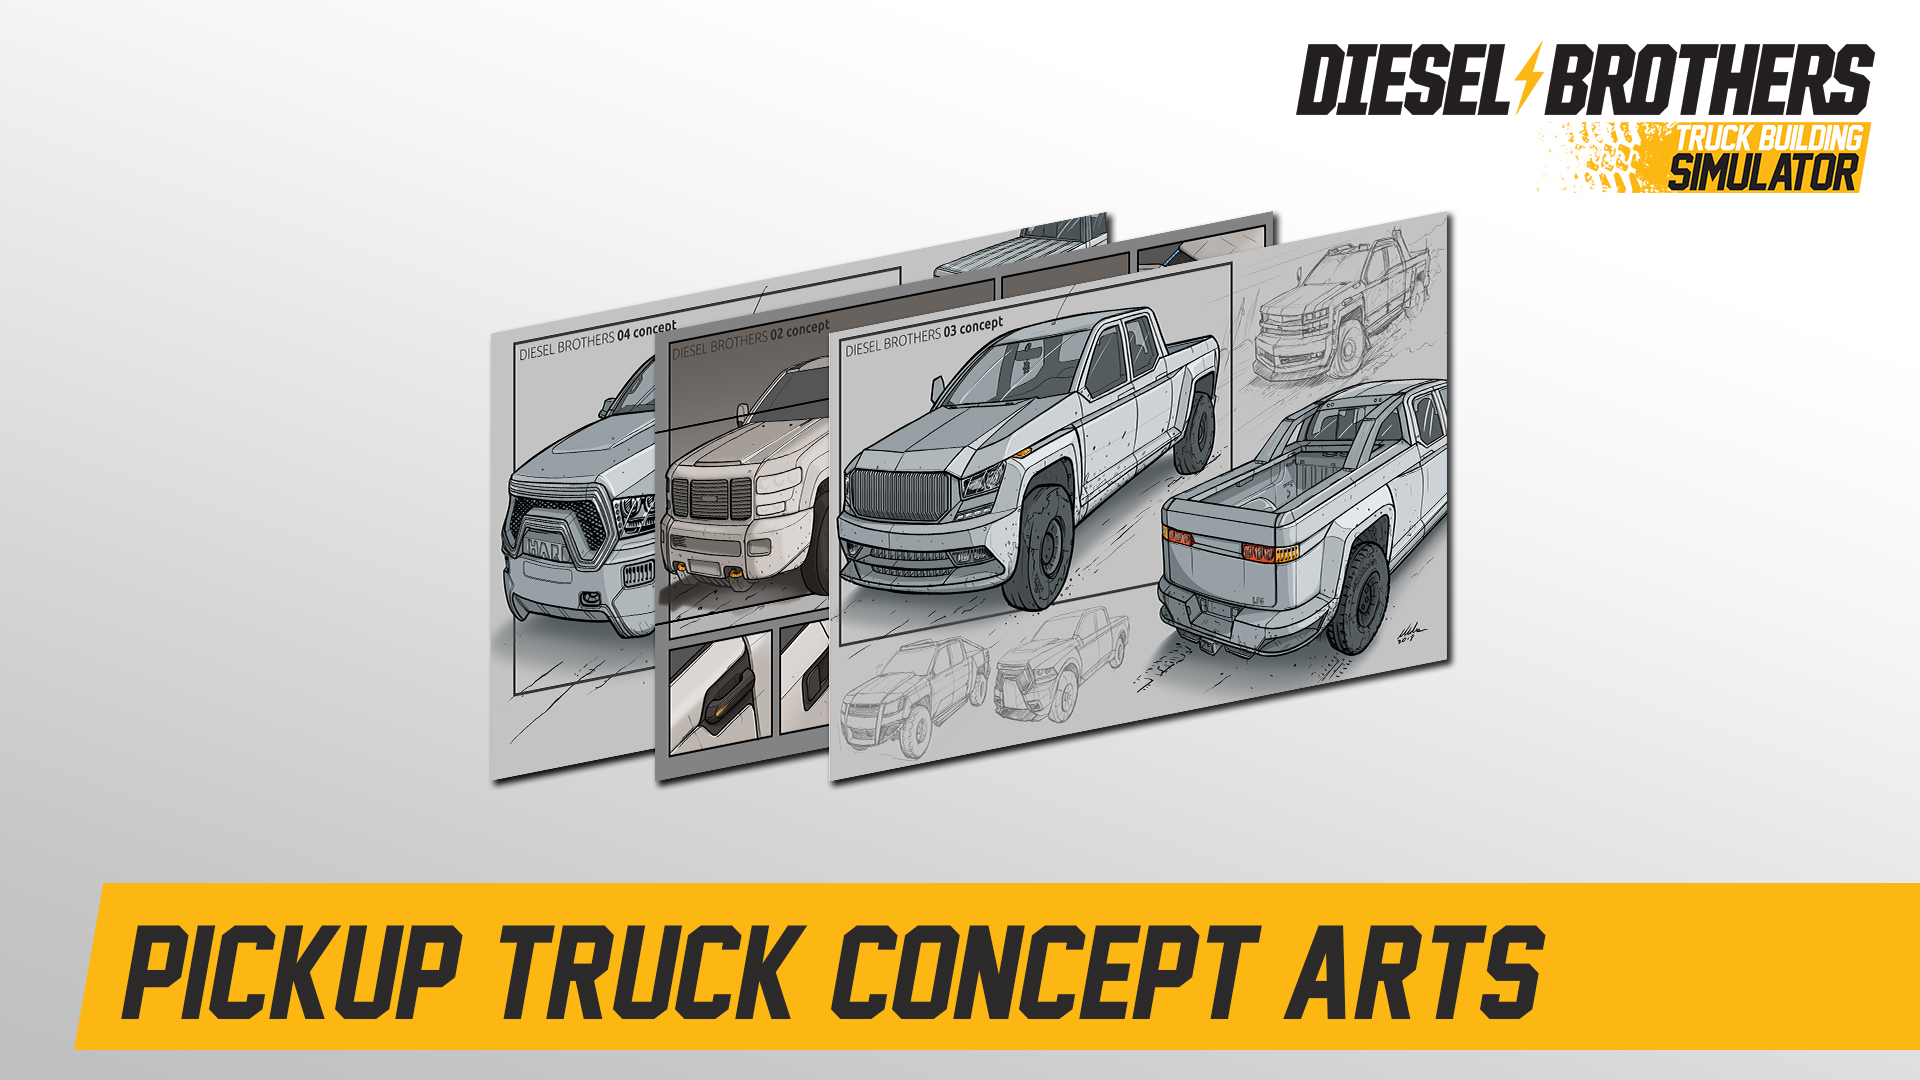 Diesel Brothers: Truck Building Simulator - Cardboard Pickup Mechanic (Papercraft) screenshot